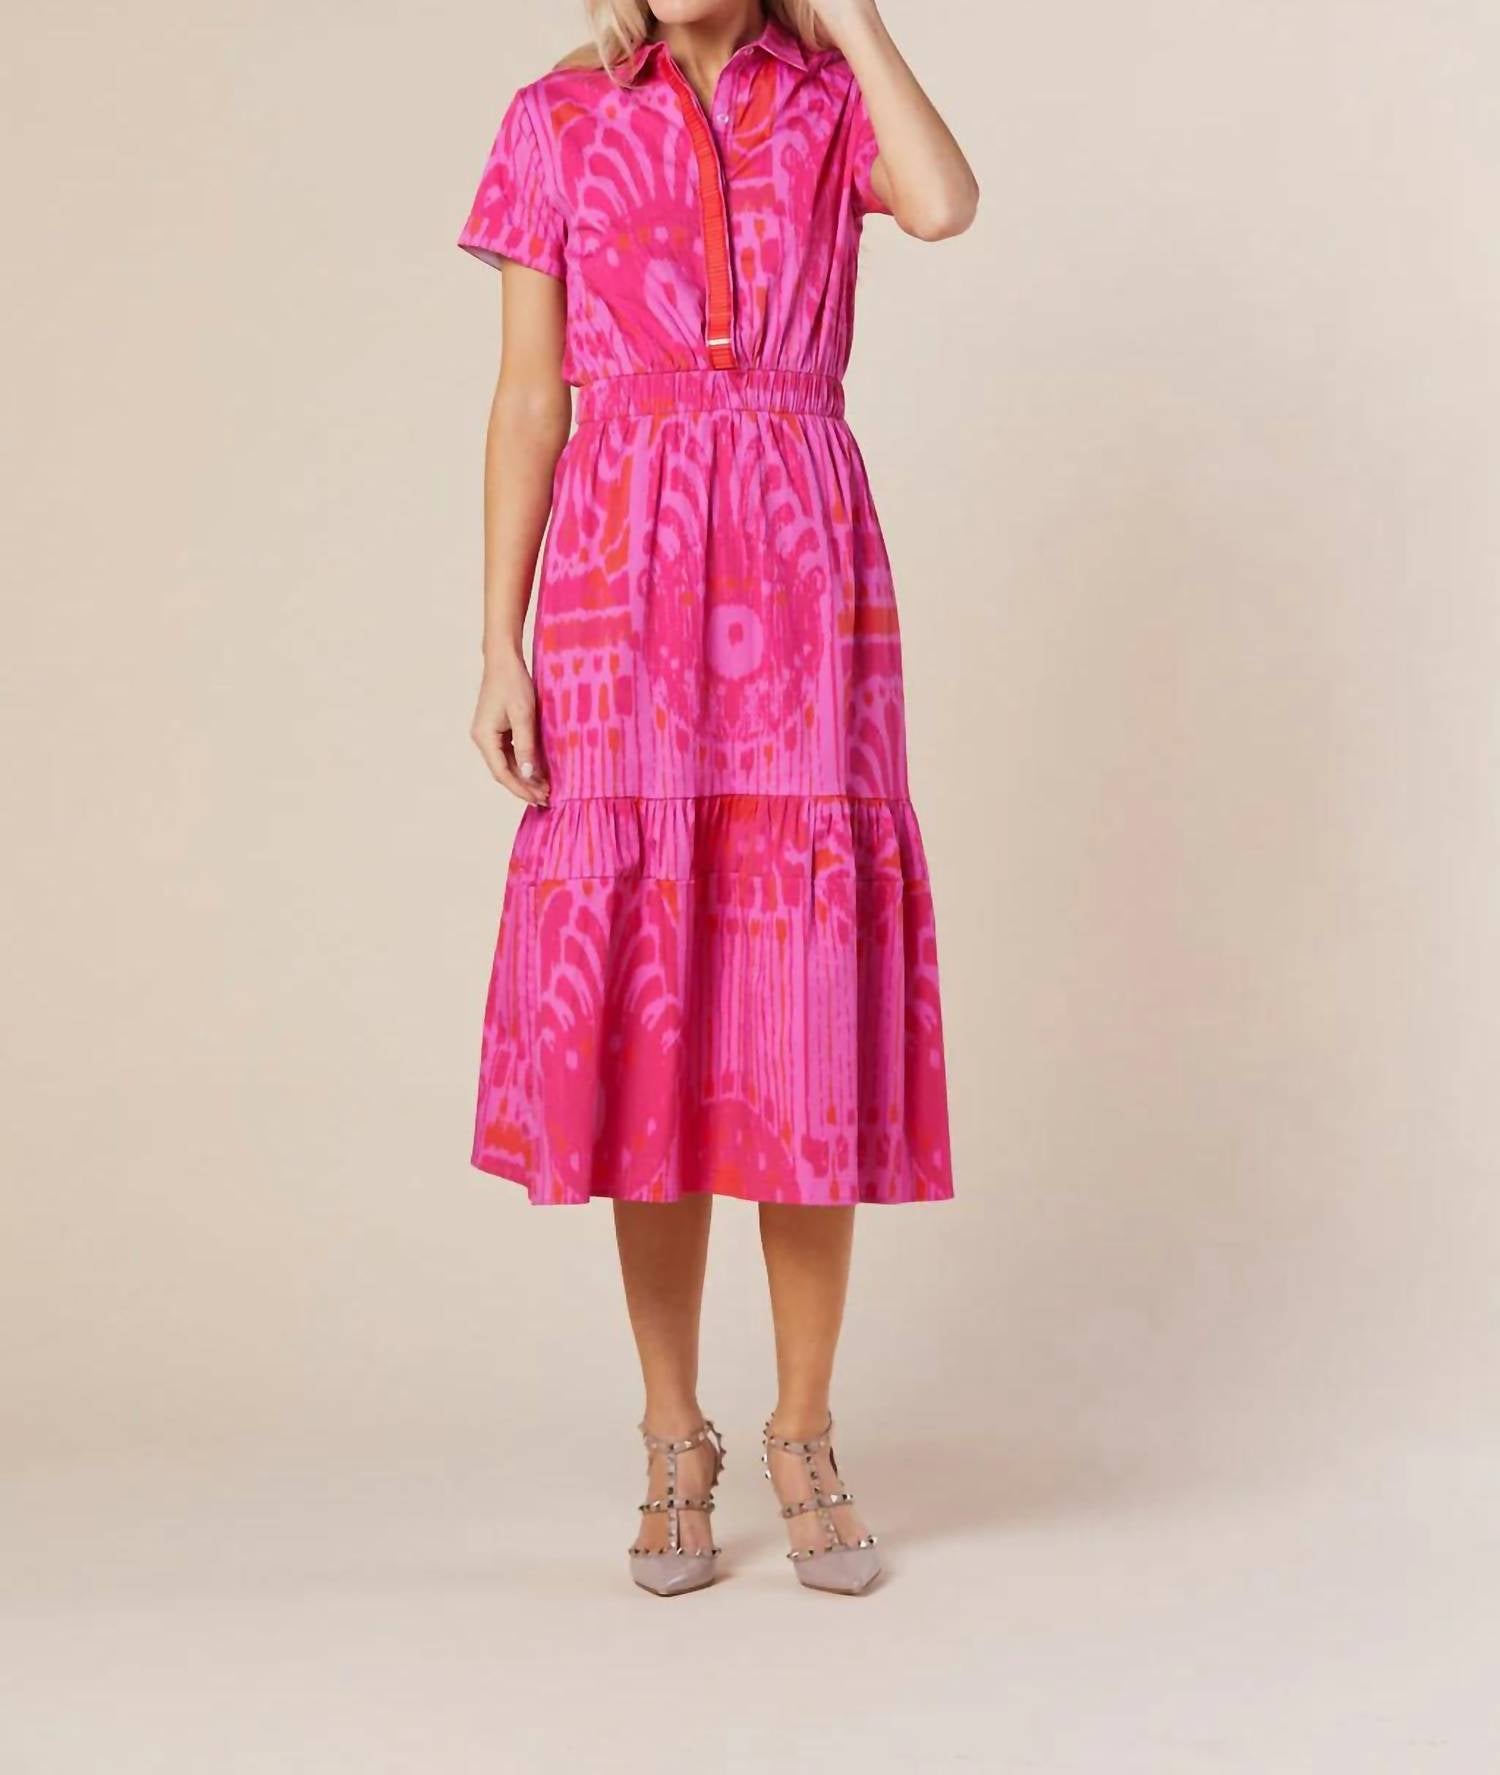 Sheridan French Gwyneth Dress In Hot Pink Moroccan Ikat